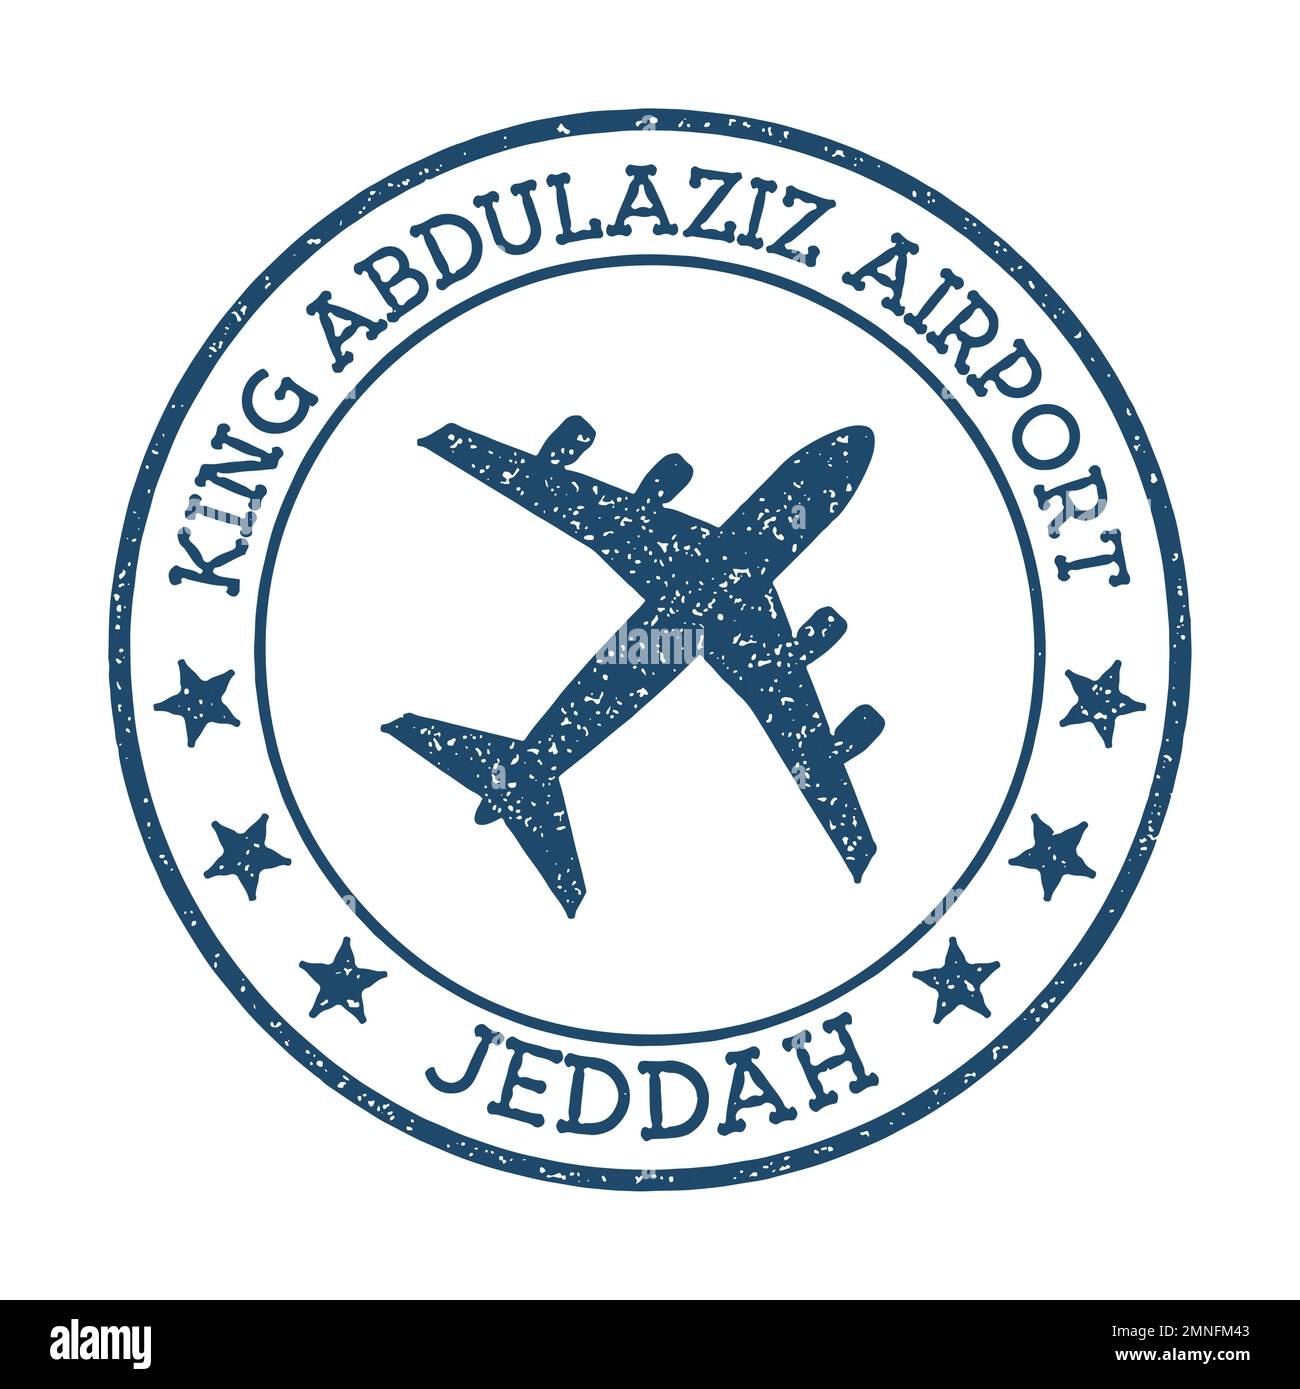 King Abdulaziz Airport Jeddah logo. Airport stamp vector illustration. Jeddah aerodrome. Stock Vector